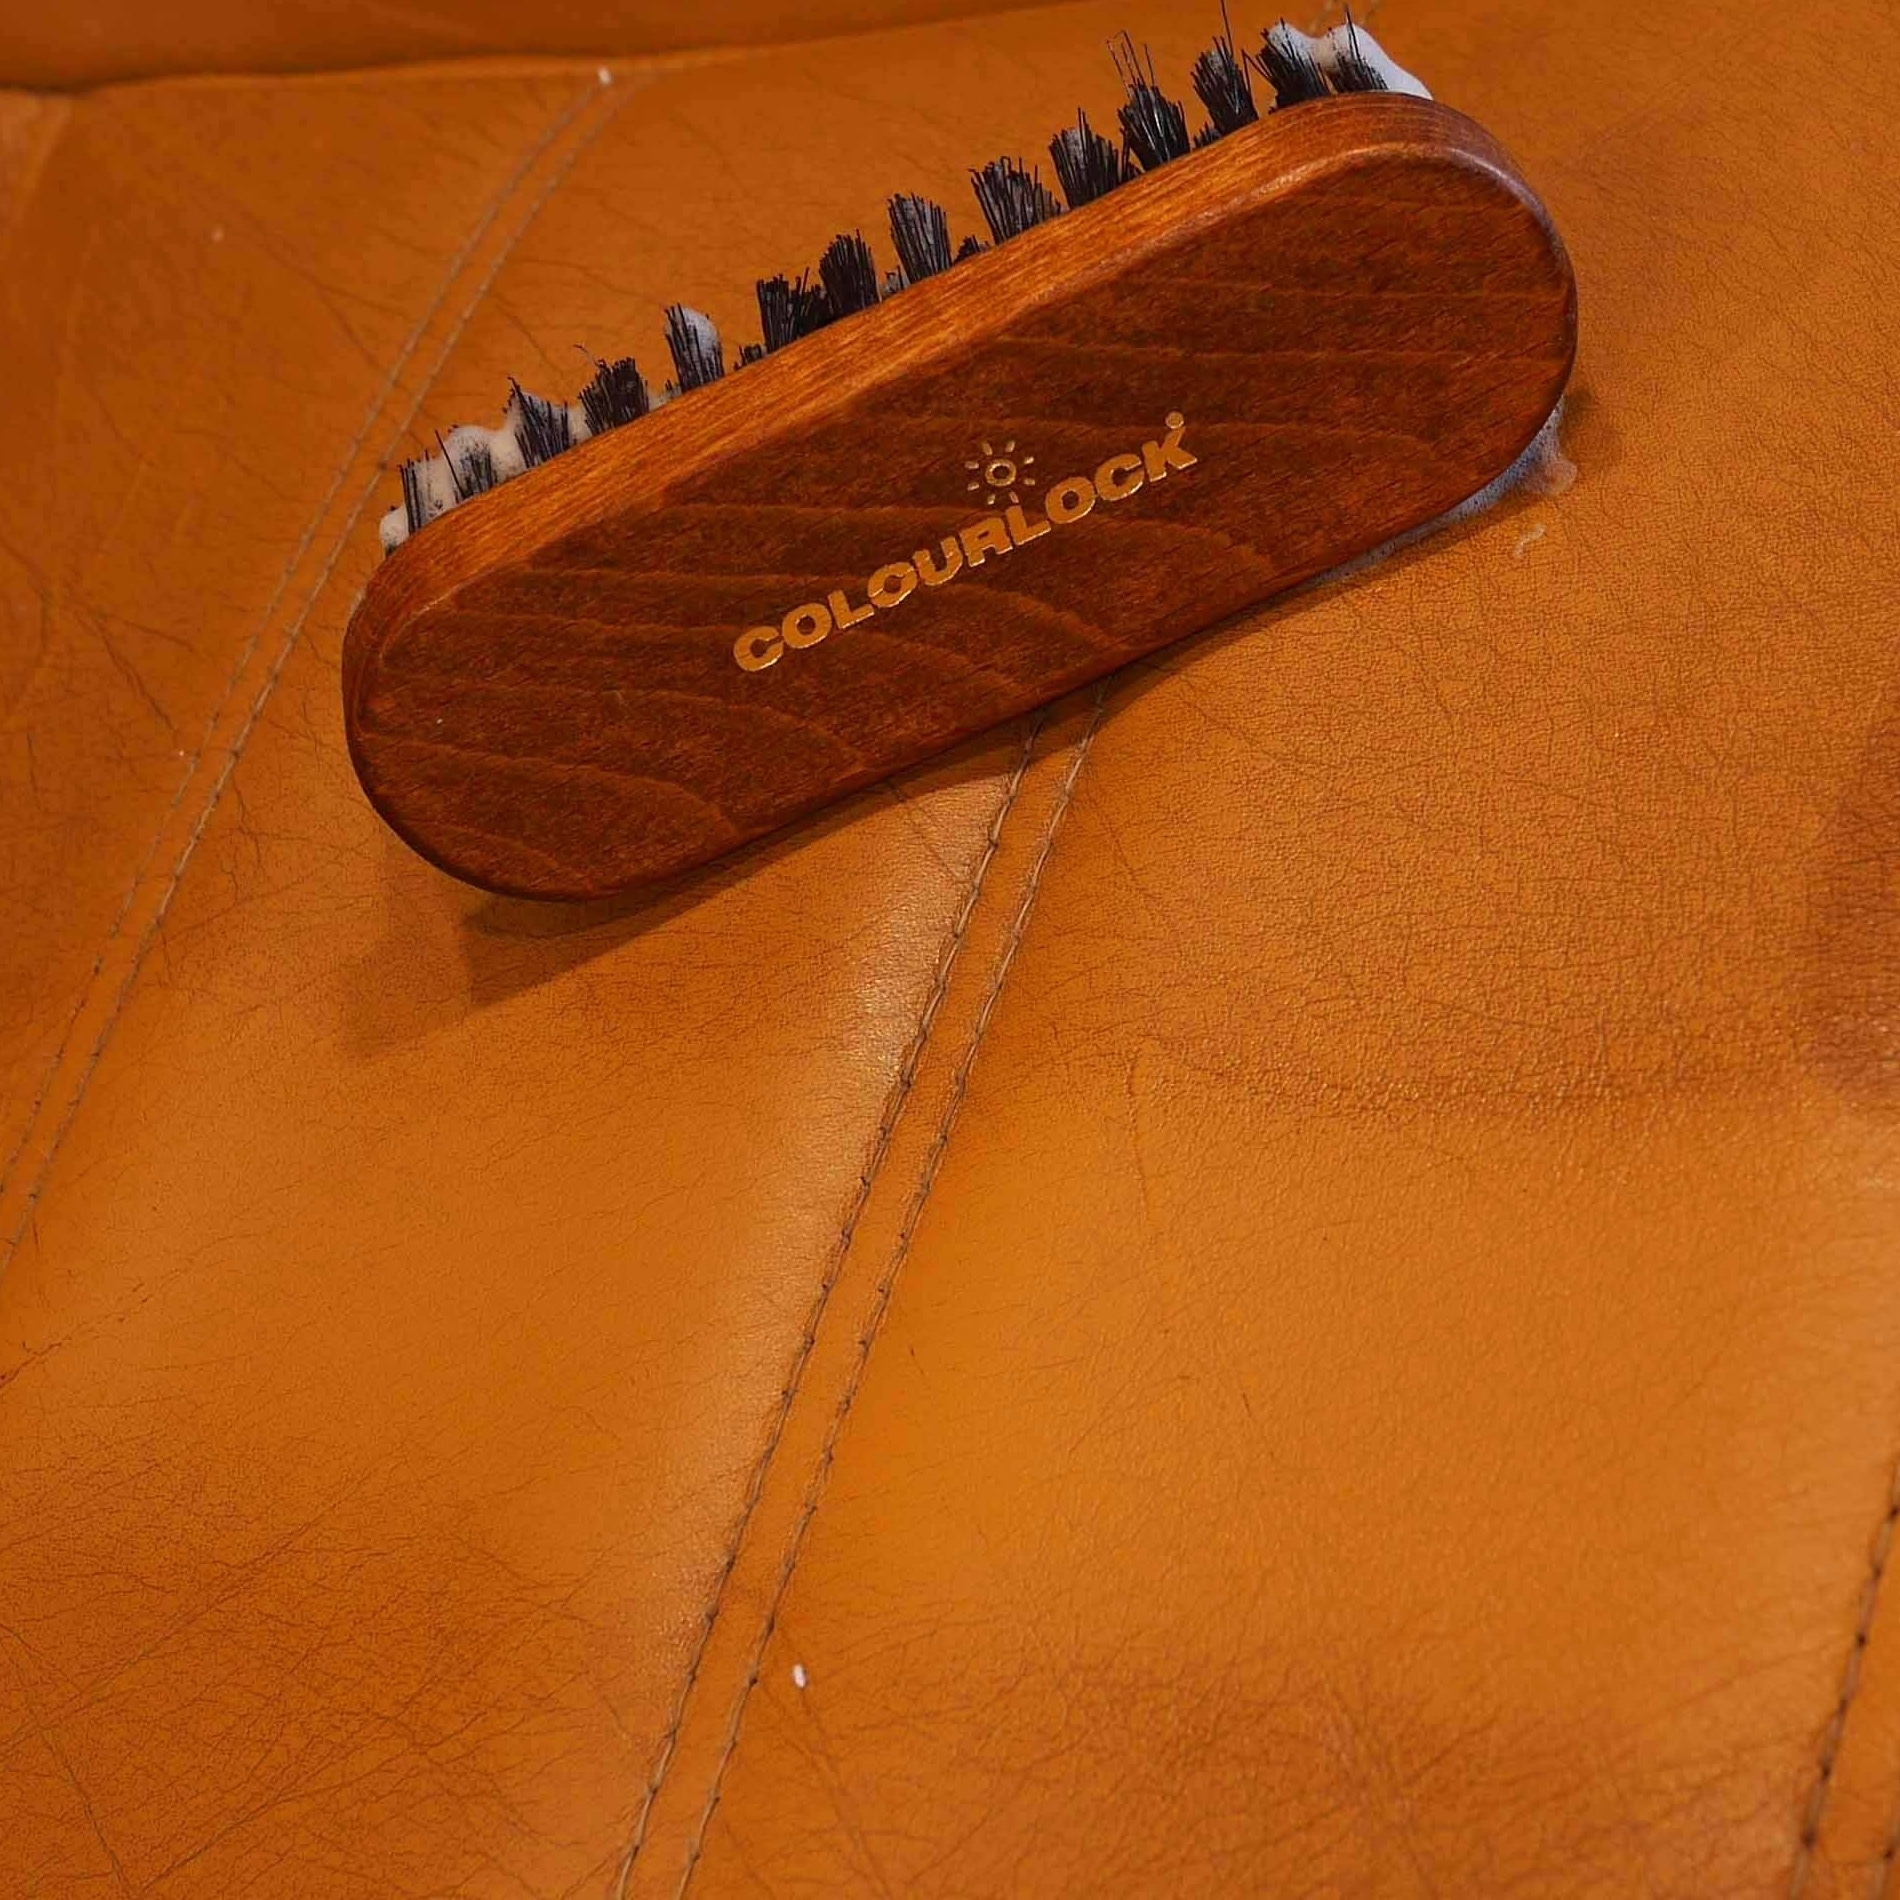 Brosse pour tissu cuir simili Colourlock – Akrro Detailing